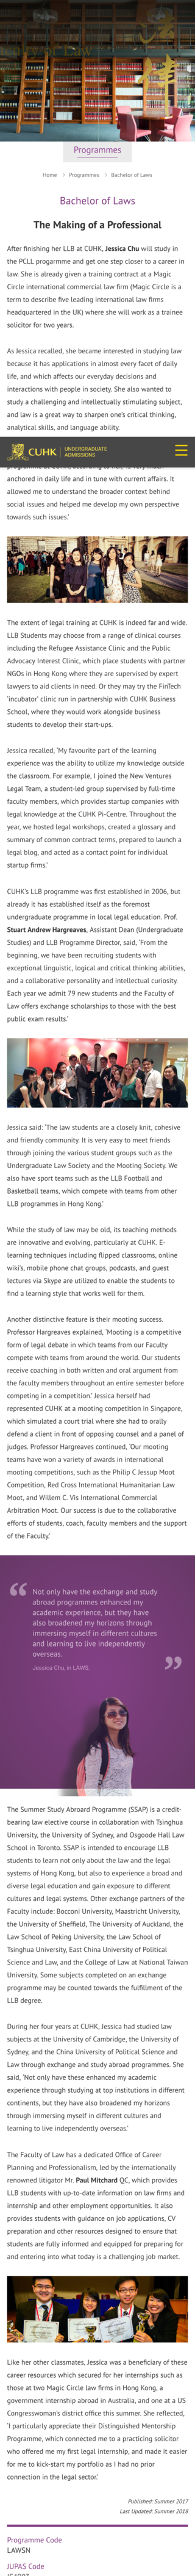 Chinese University of Hong Kong website screenshot for mobile version 6 of 6